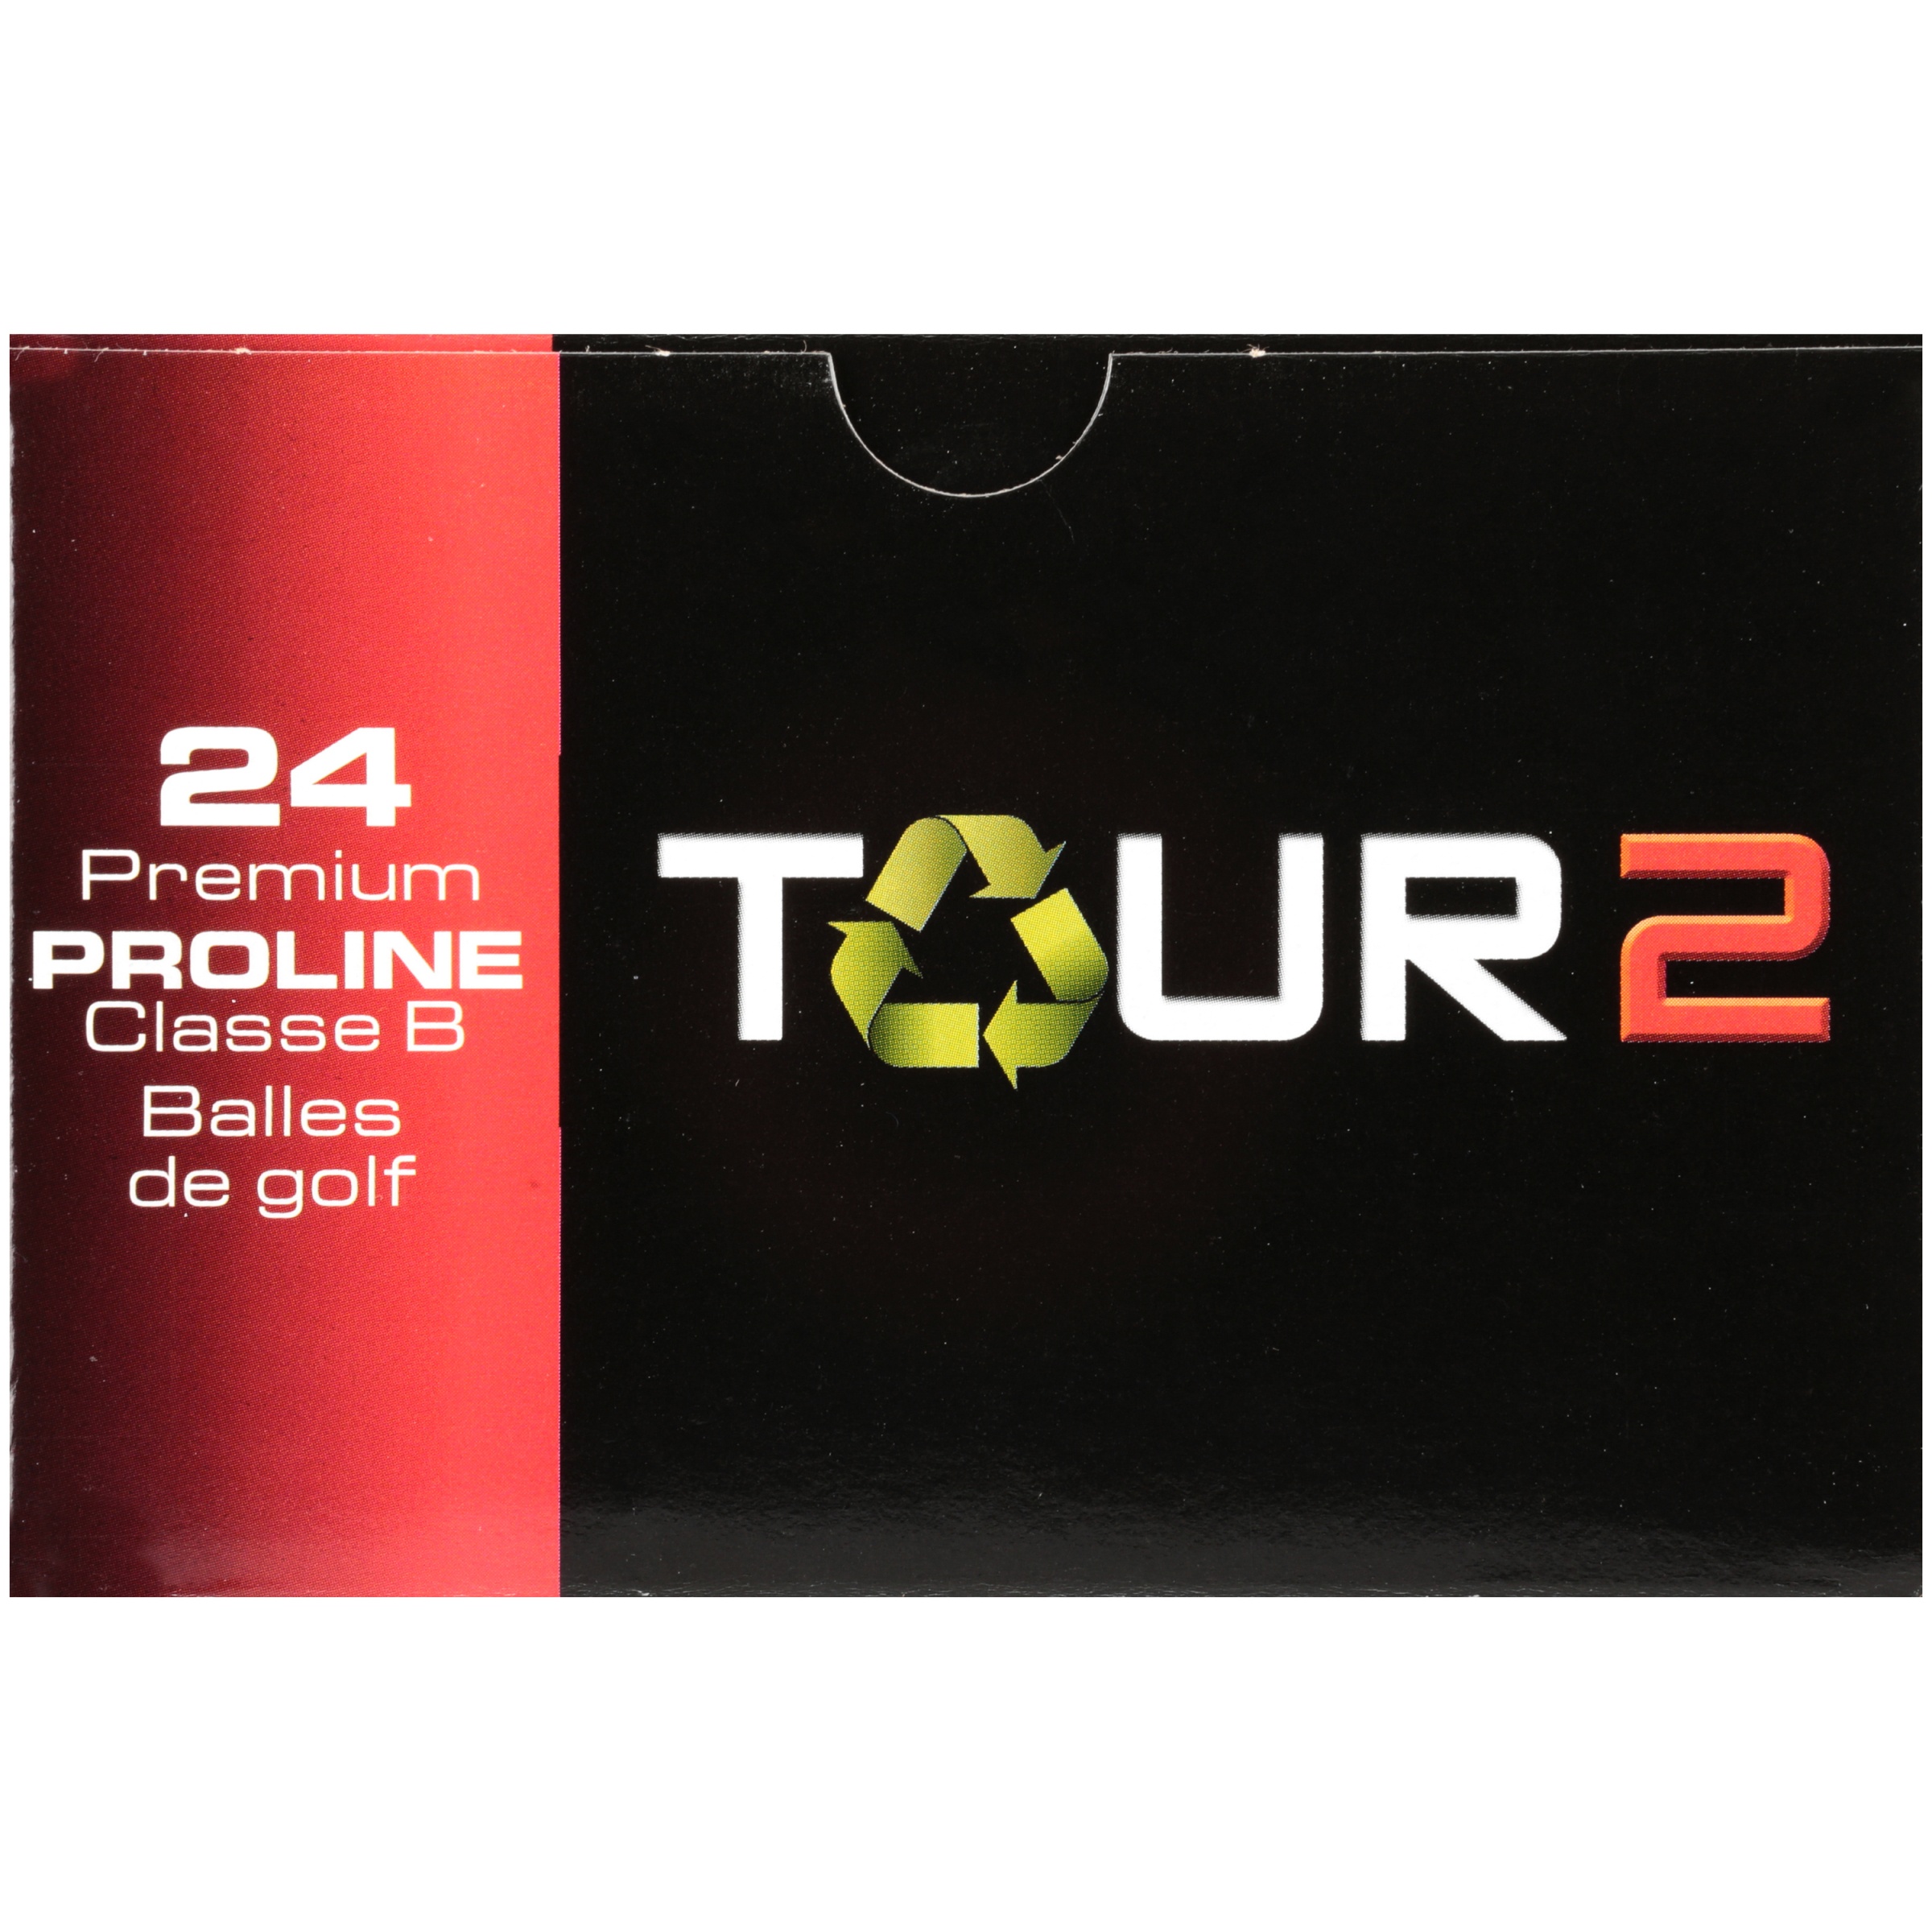 Titleist Proline Golf Balls, 24 Pack - image 3 of 9